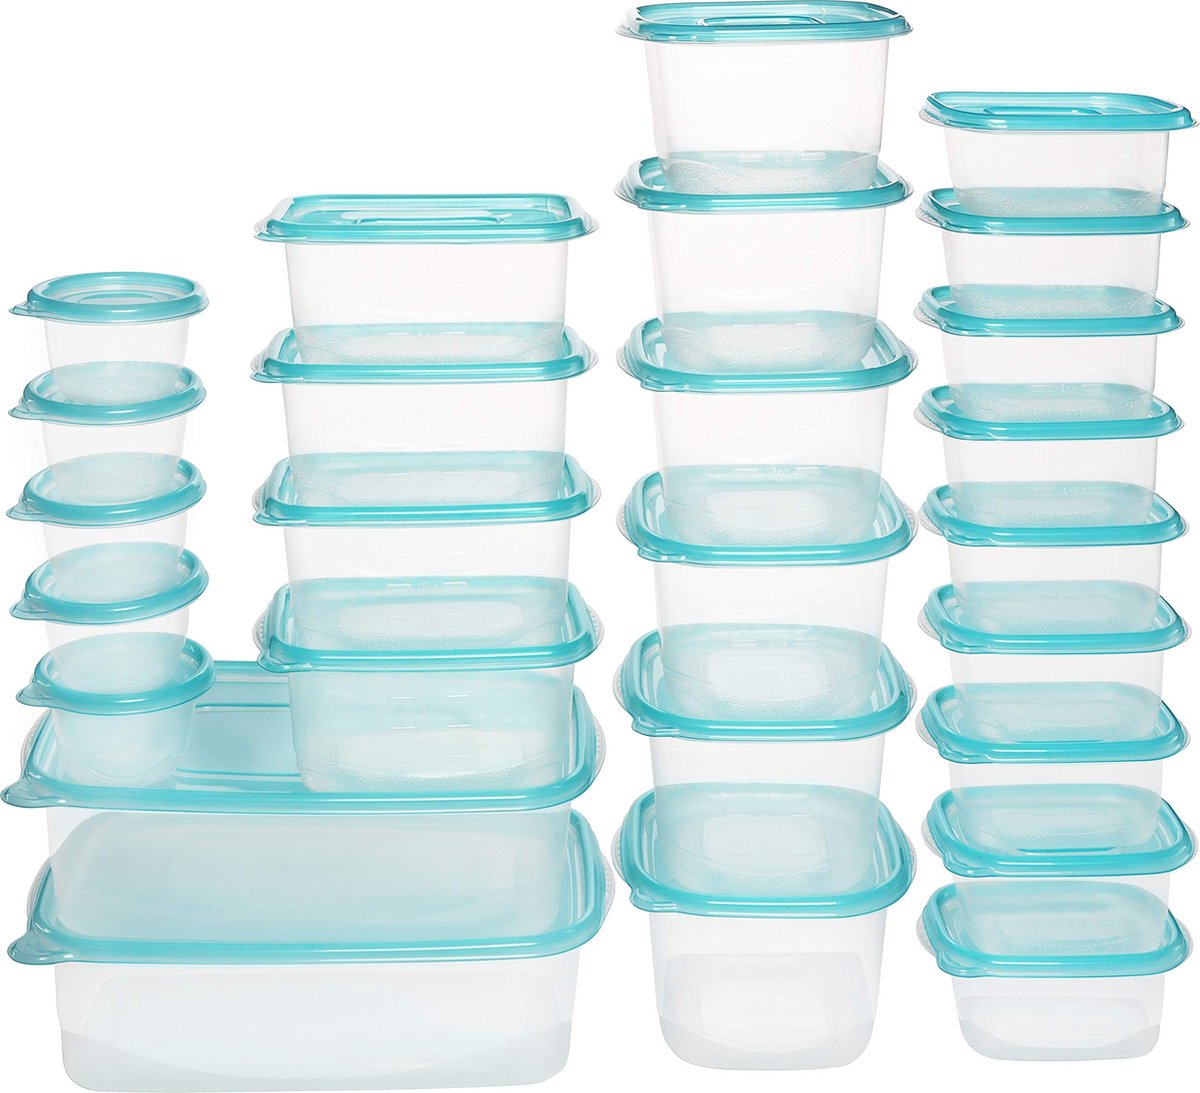 Belle Vous Helder Herbruikbaar Plastic Voedsel Containers met Deksel (26Pak in 5 maten) - Lekbestendig, BPA Vrije Opslag Bakjes - Magnetron, Diepvries & Vaatwasser Bestendig - Meal Prep Lunchboxes